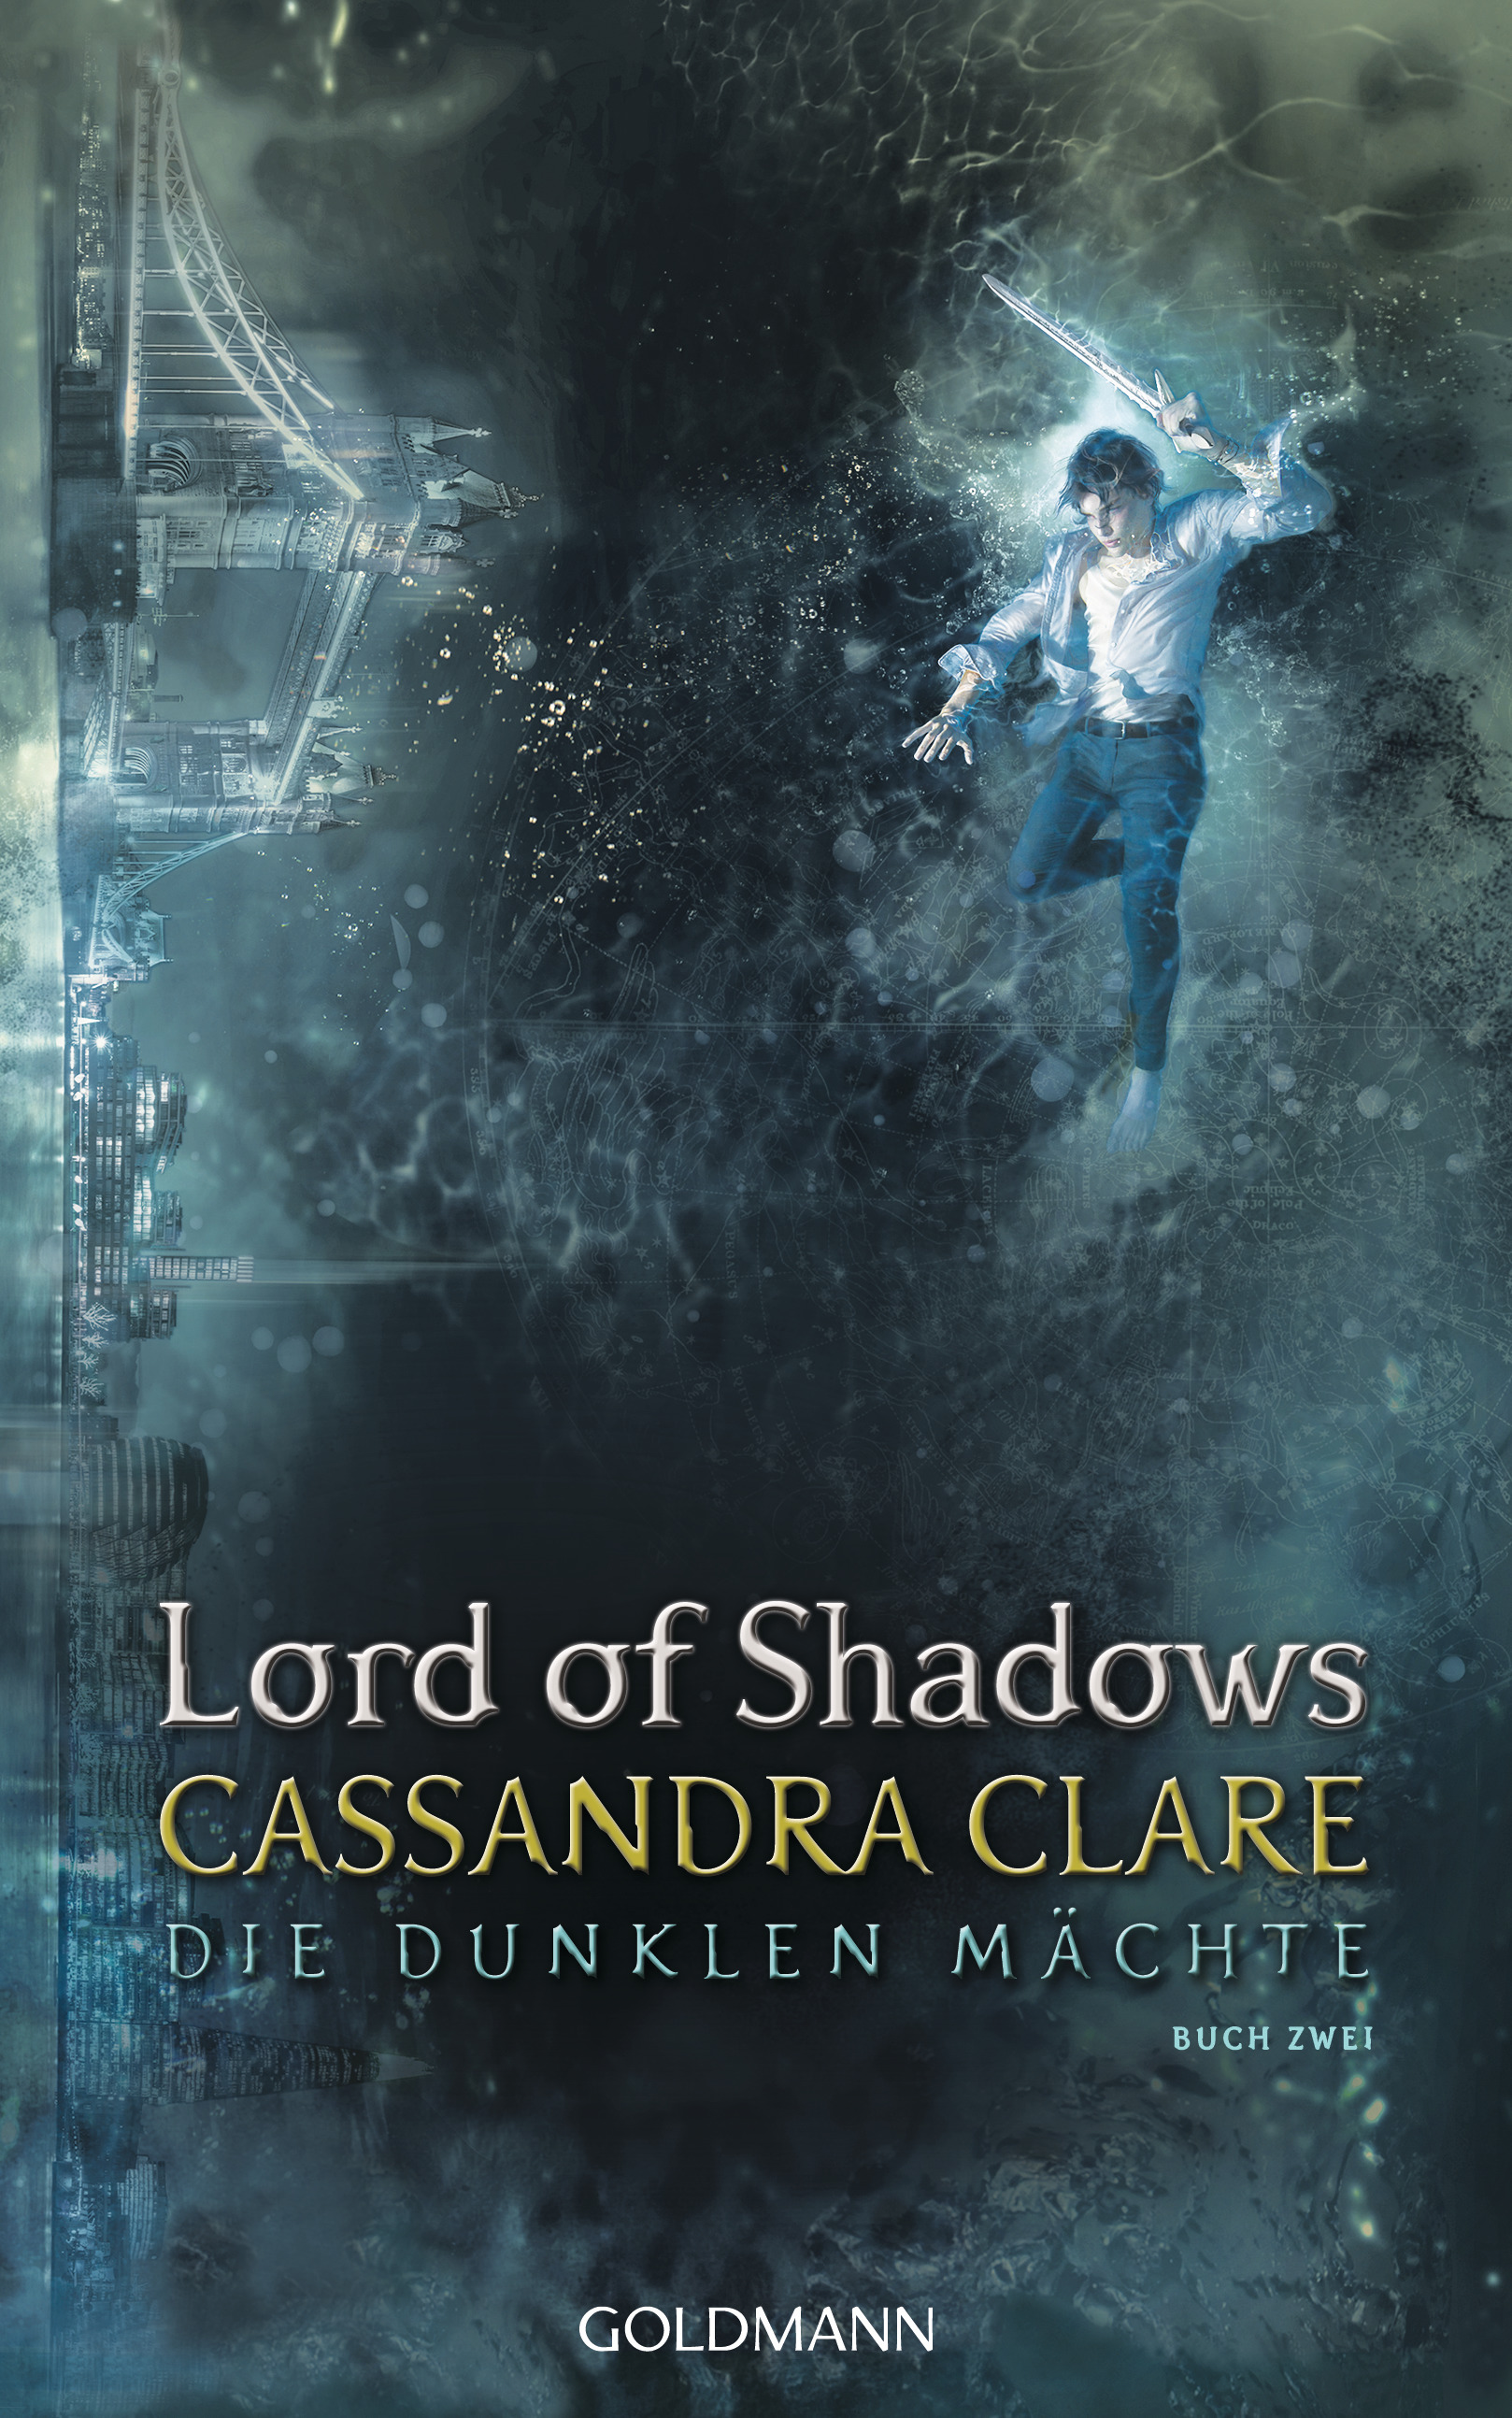 https://www.randomhouse.de/Buch/Lord-of-Shadows/Cassandra-Clare/Goldmann/e496831.rhd